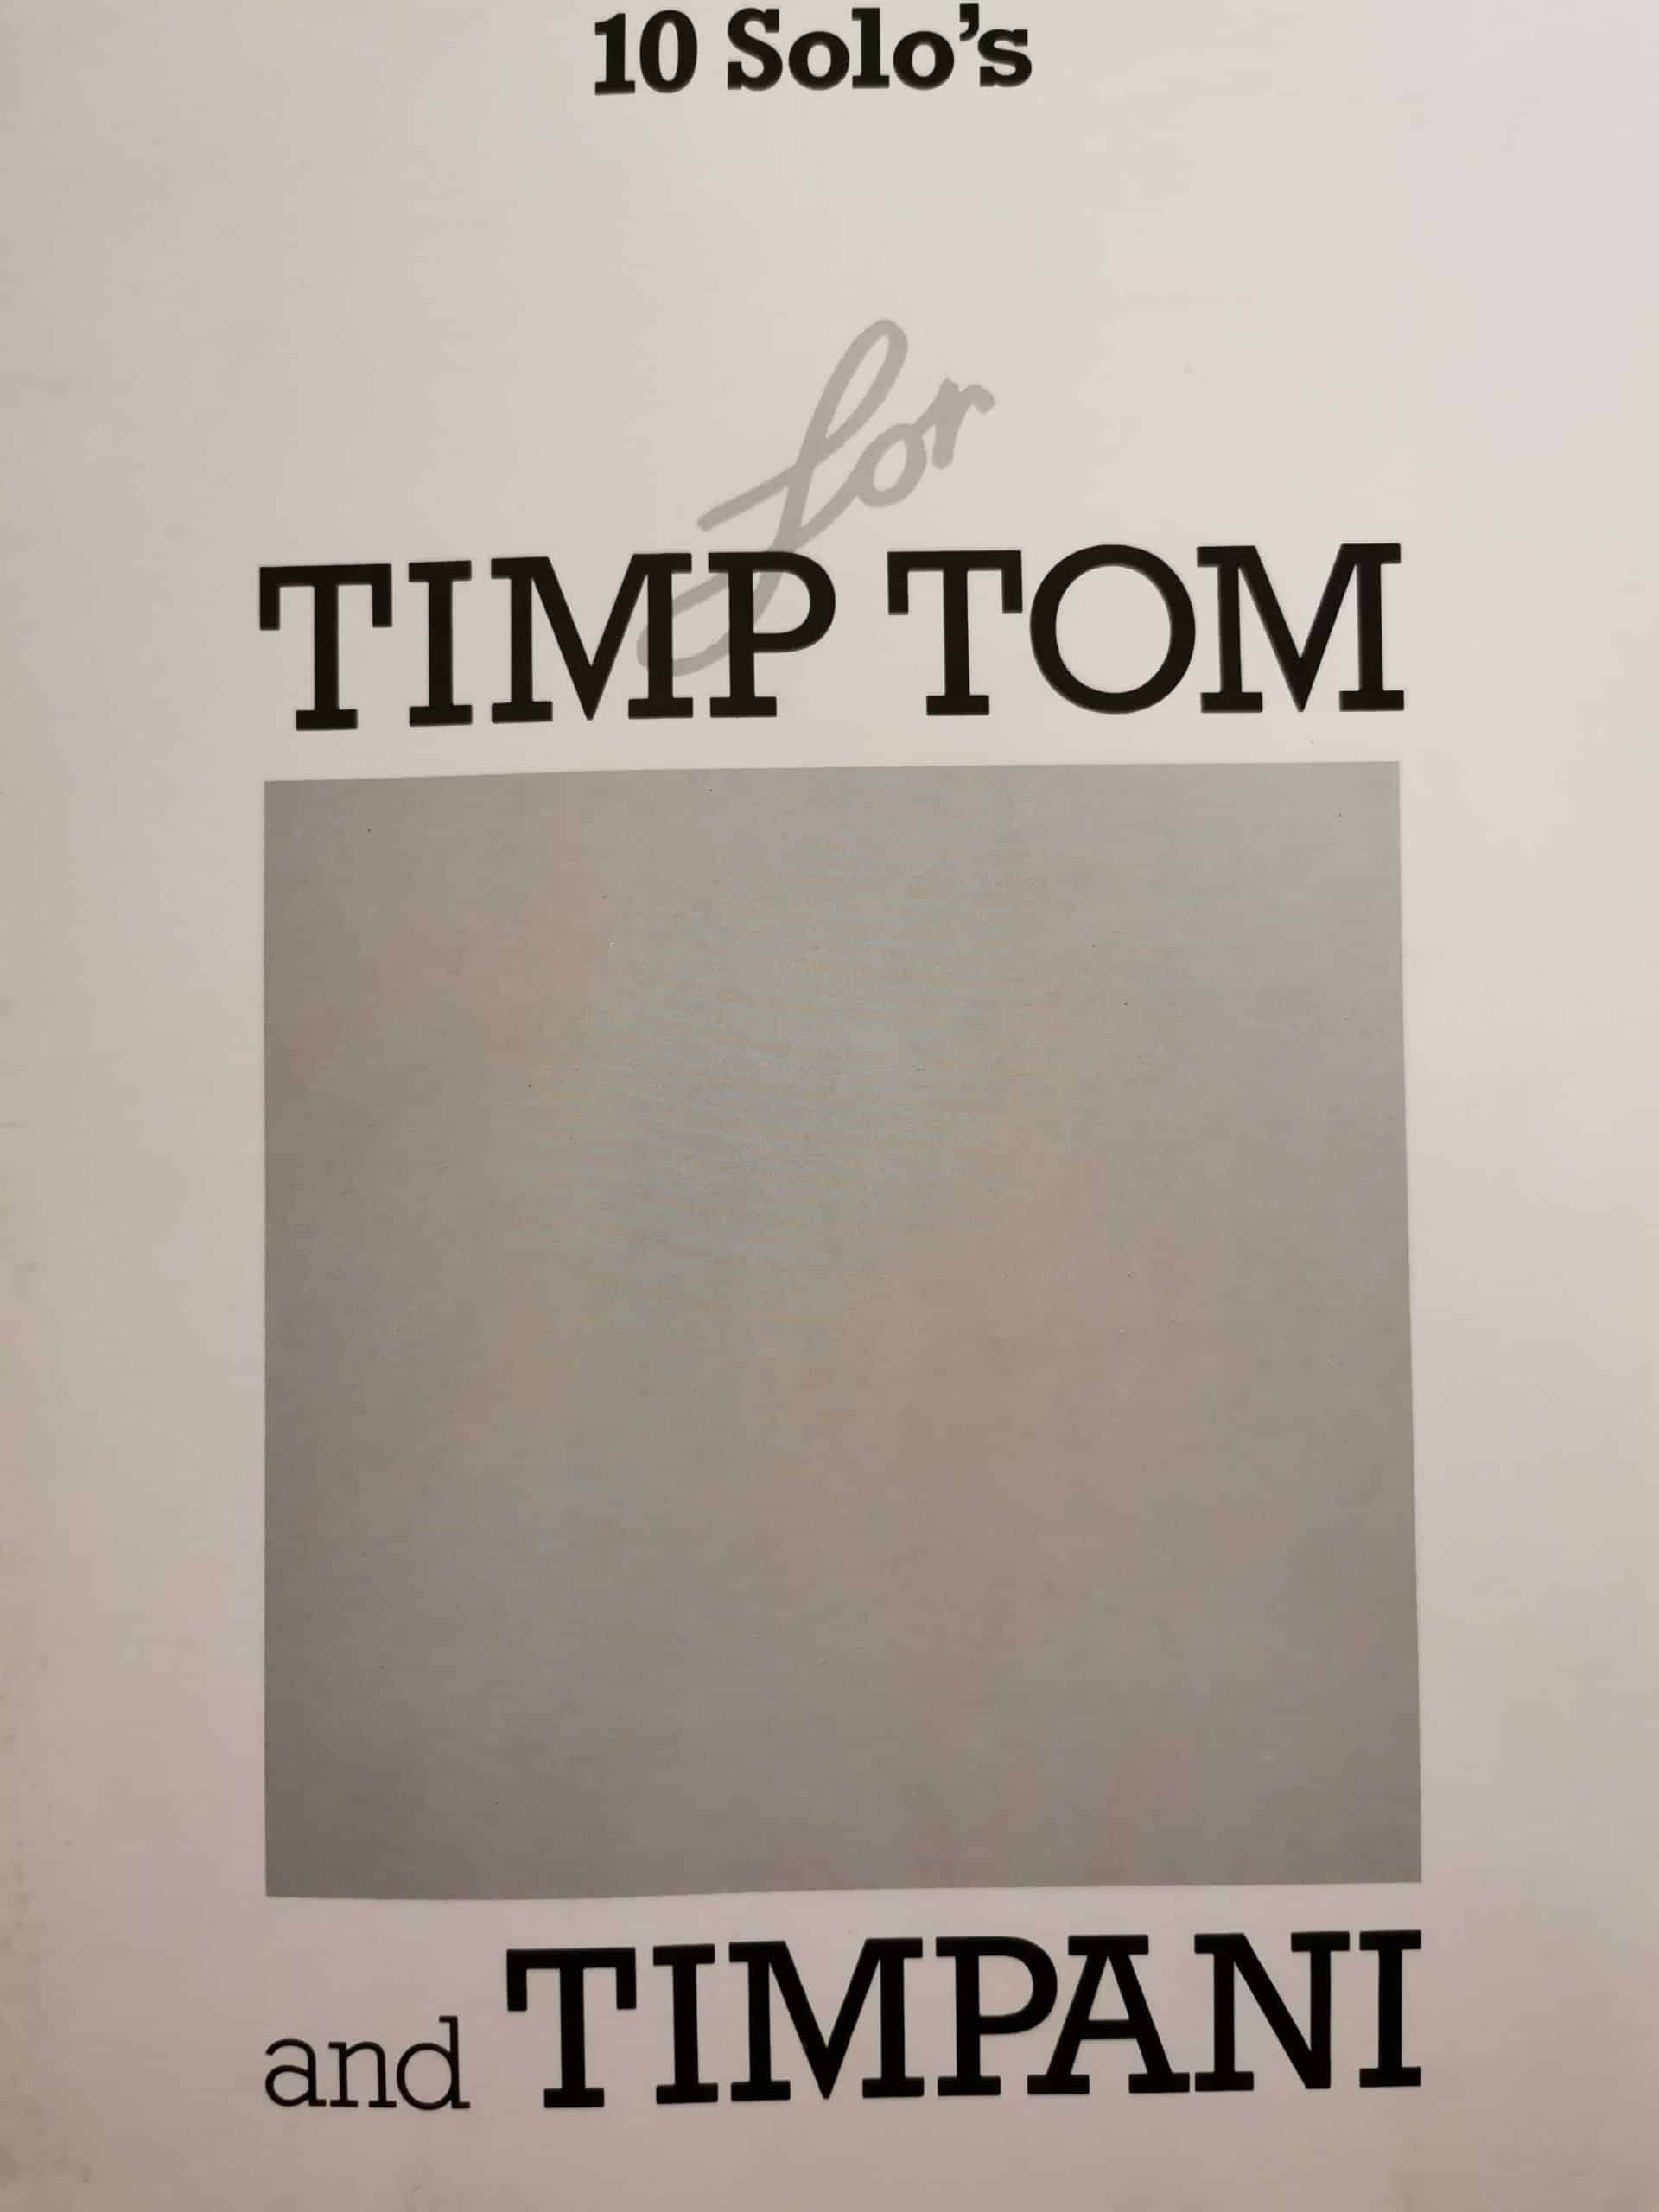 10 Solo's for Timp Tom vol. 1 by Jelmo Piovesana